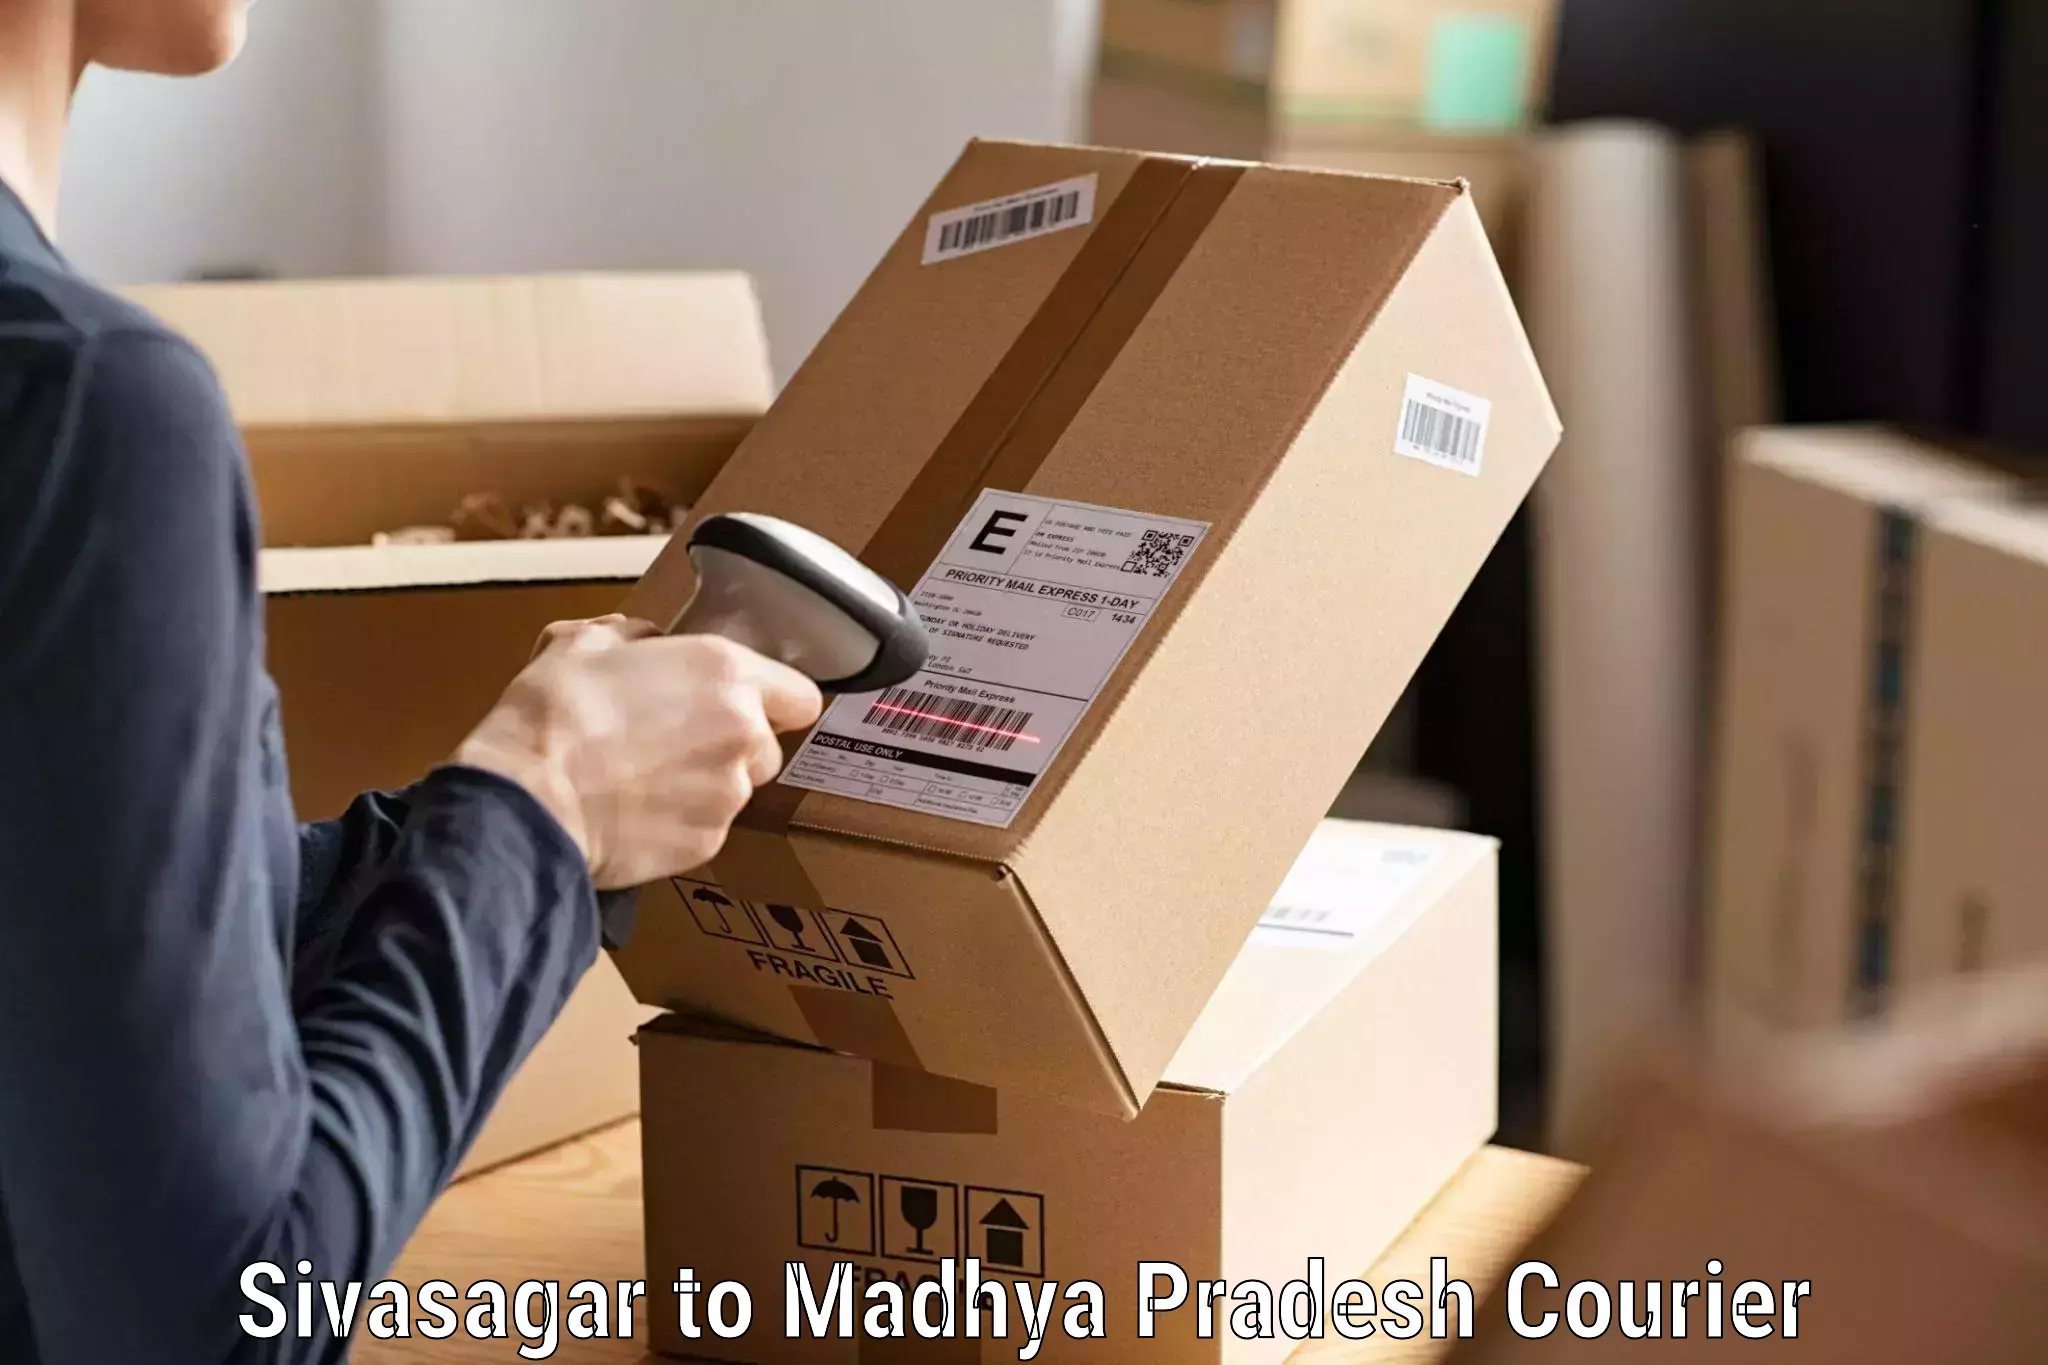 High-capacity parcel service Sivasagar to Petlawad